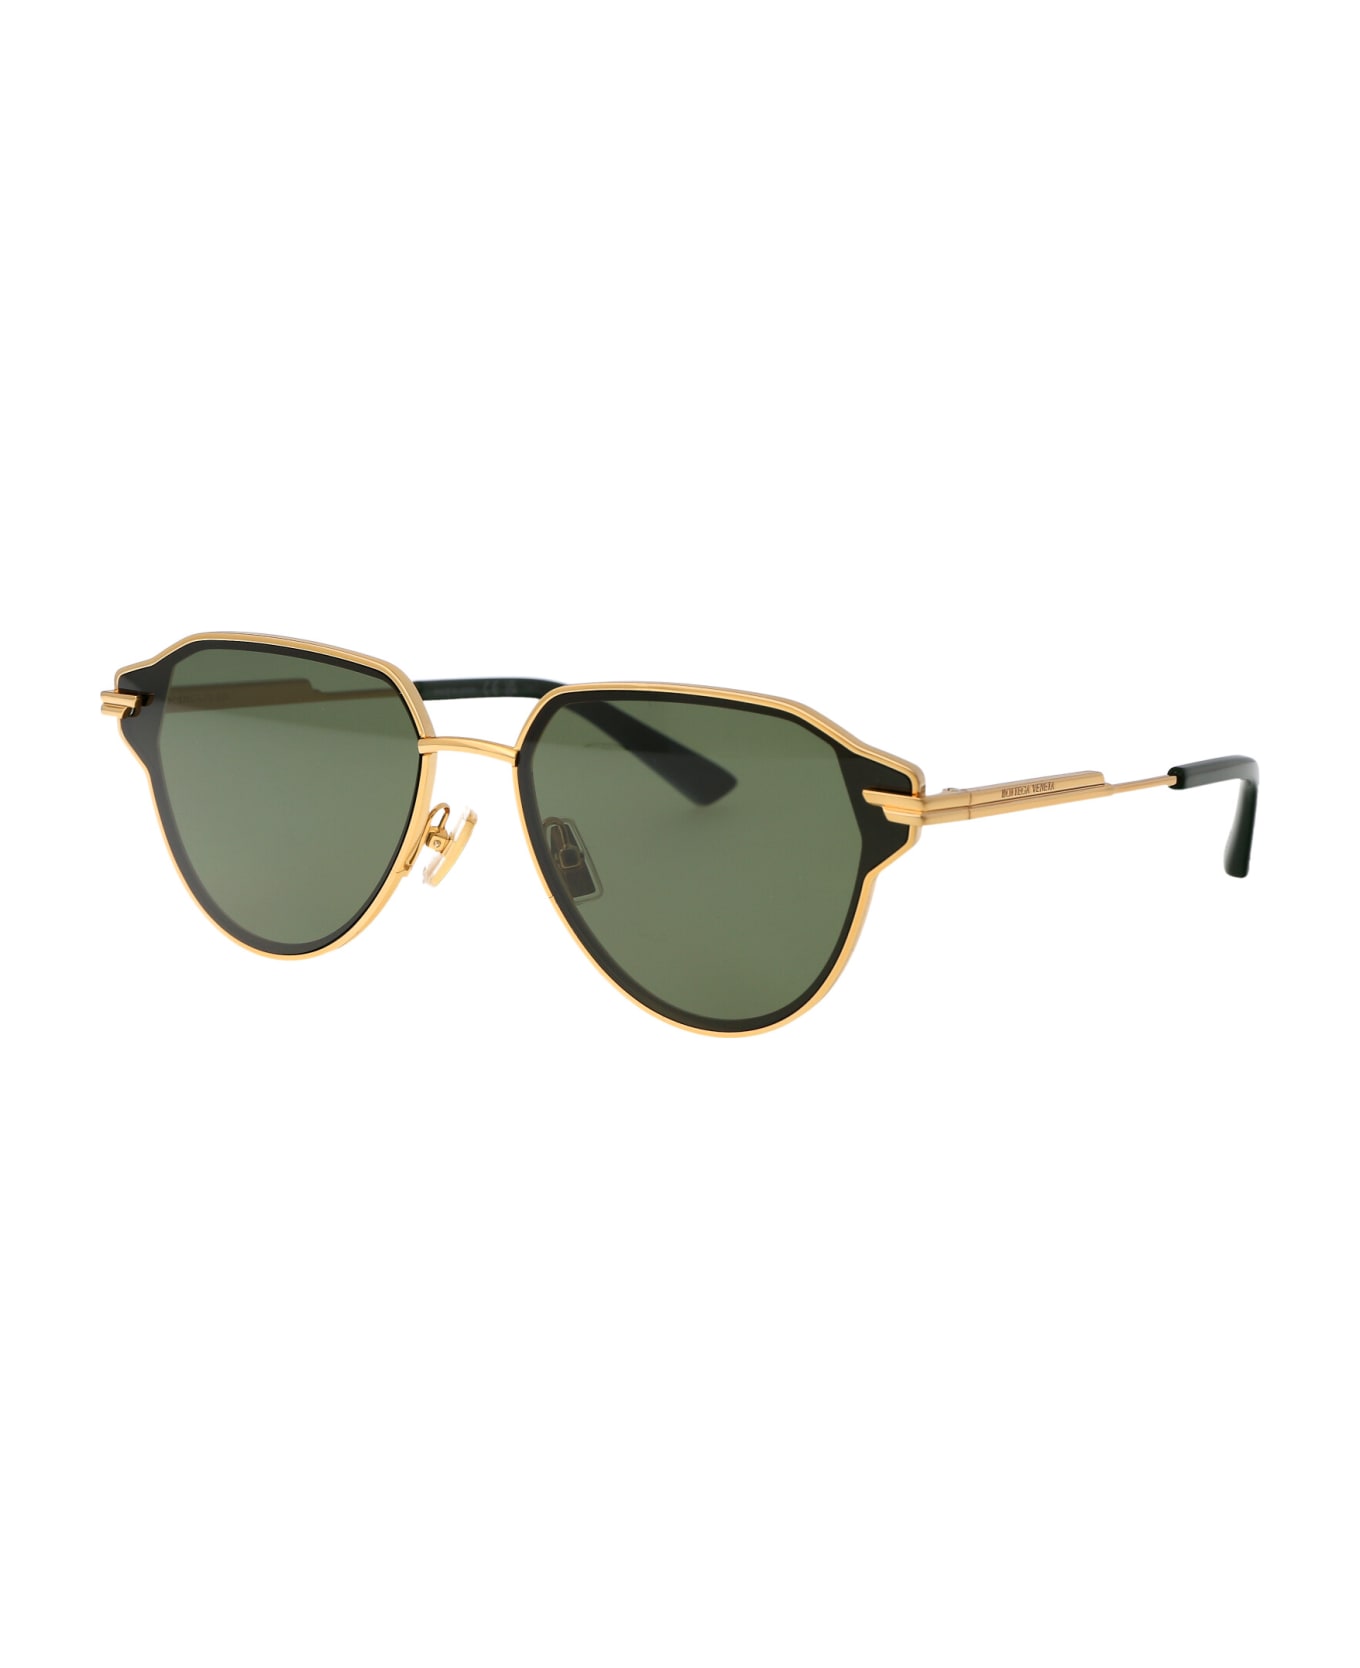 Bottega Veneta Eyewear Bv1271s Sunglasses - 003 GOLD GOLD GREEN サングラス